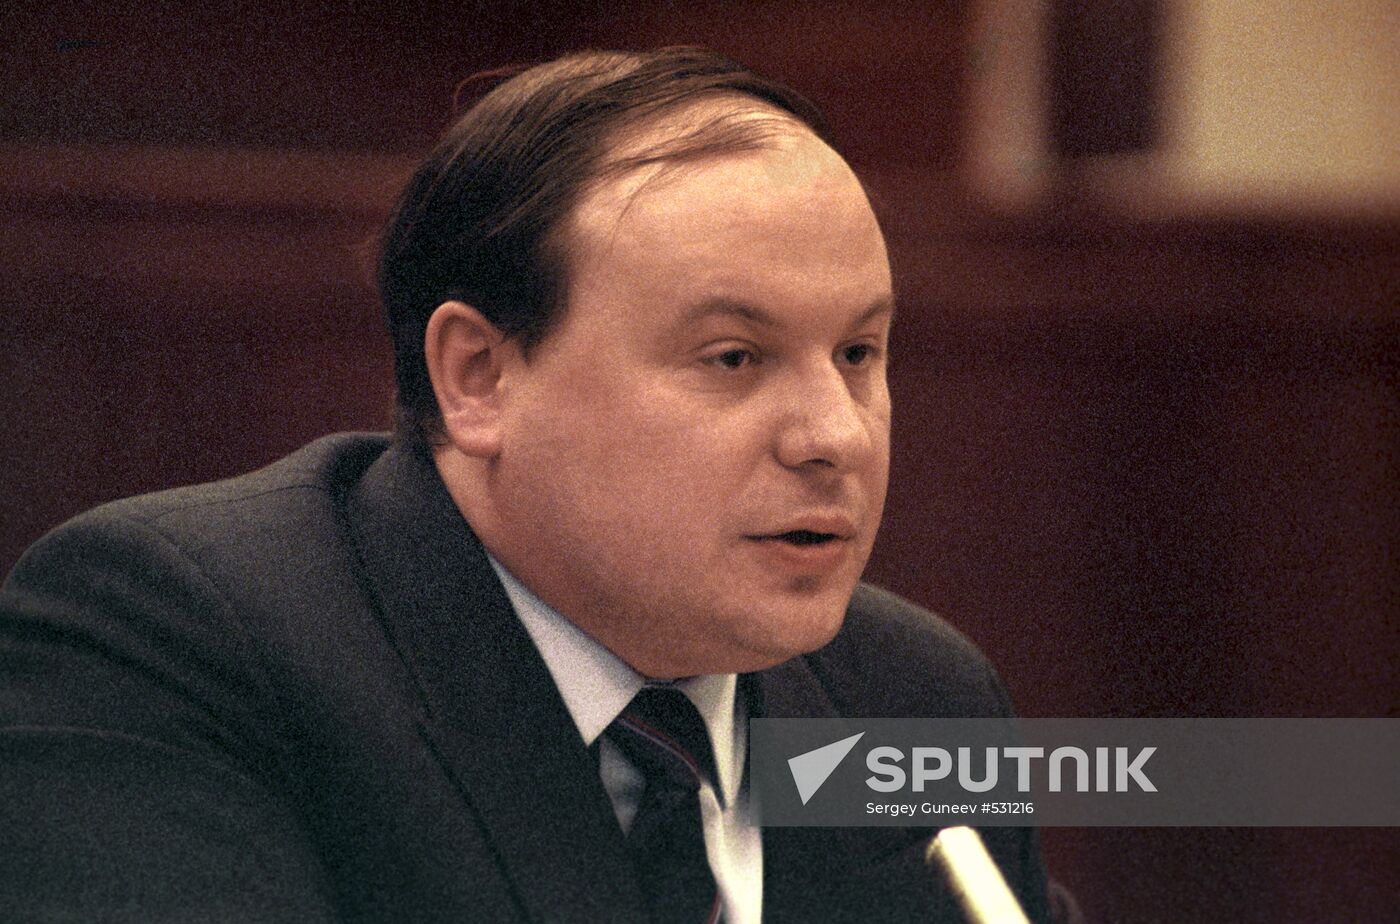 Soviet and Russian economist and politician Yegor Gaidar